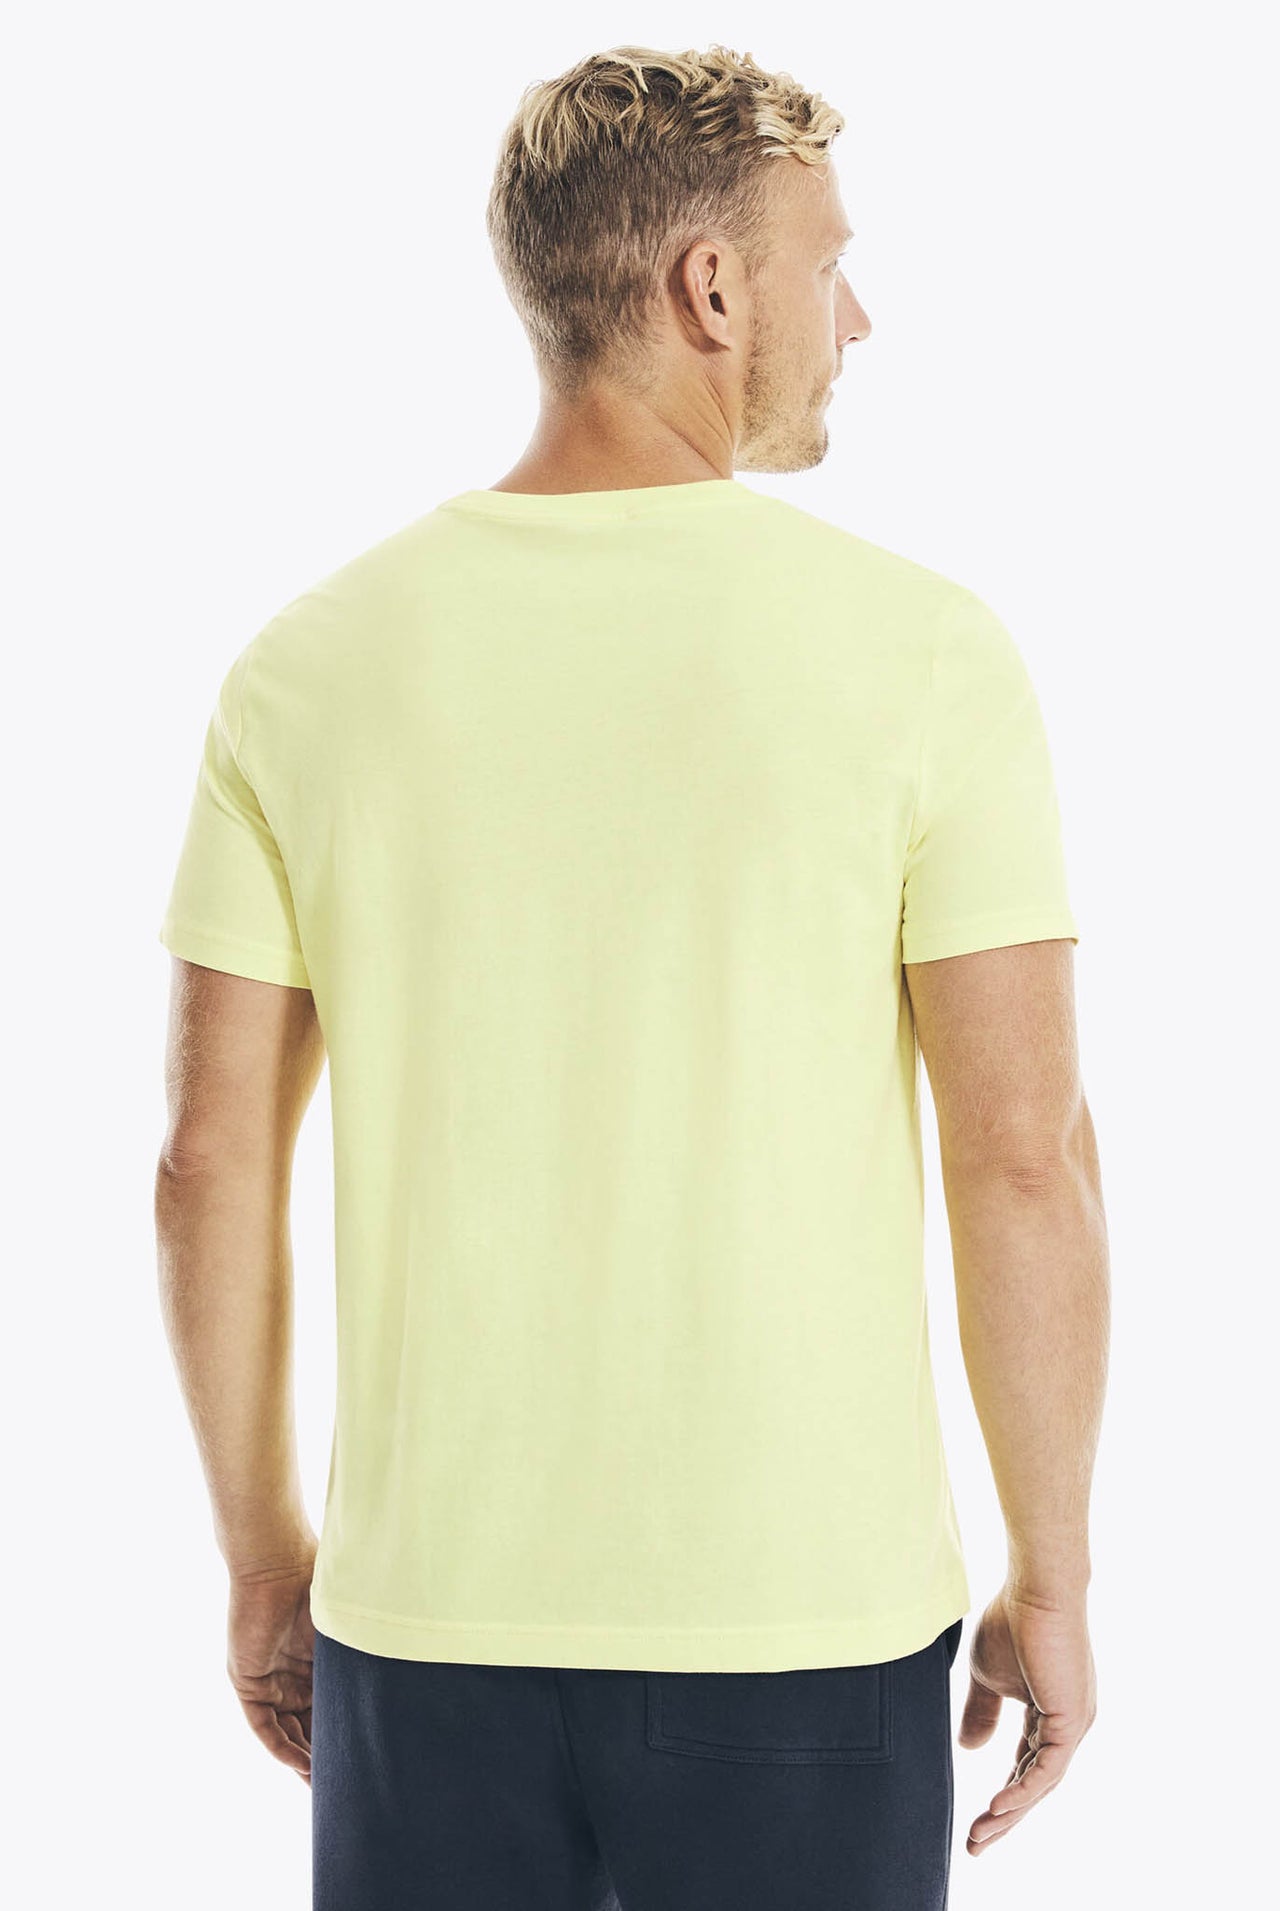 Camiseta Nautica Clasica Yellow Fin